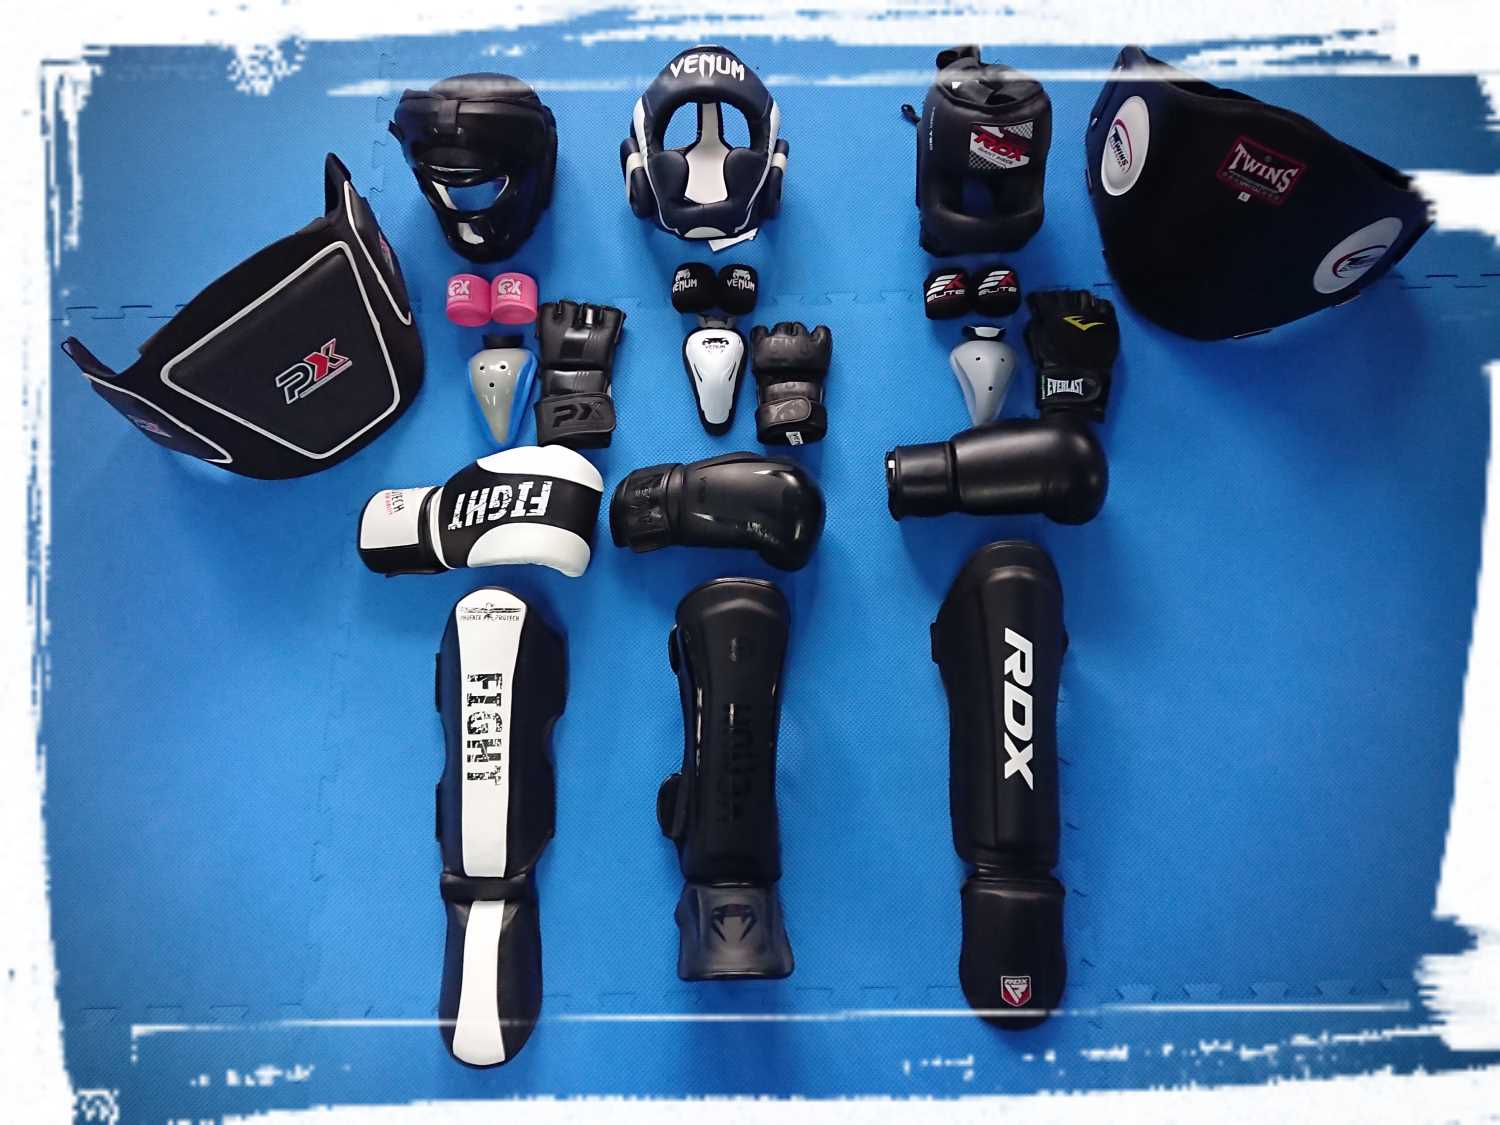  Kopfschutz - Zahnschutz - Ellenbogenschütze -  Unterarmschützer - MMA Handschuhe - Boxhandschuhen - Brustschutz  -Trittschutz - Schienbeinschützer